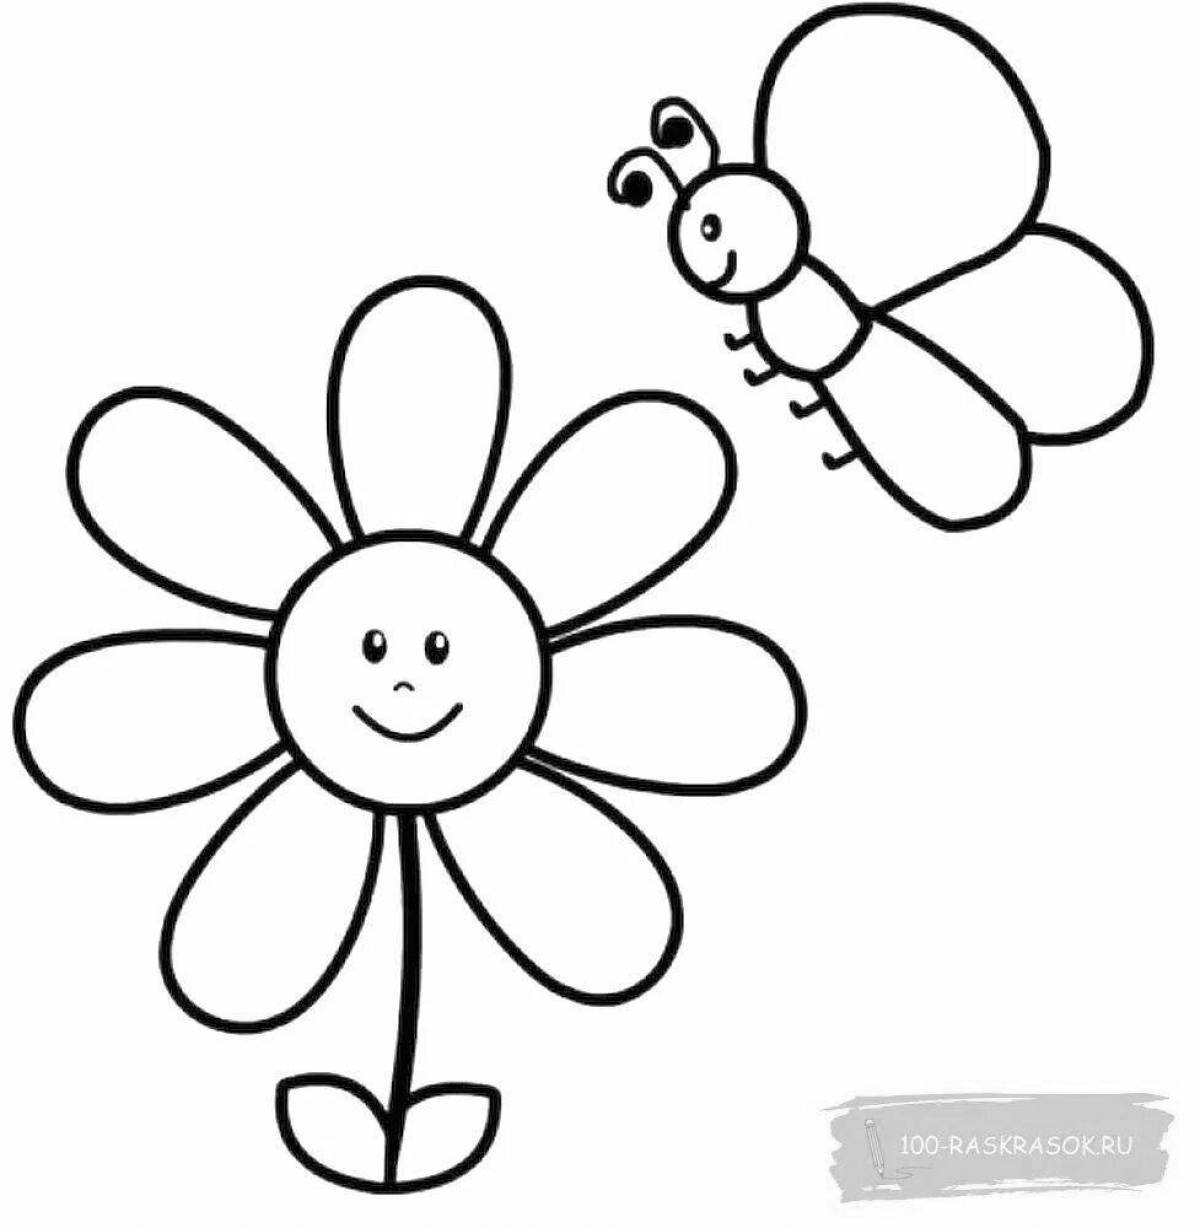 Радостная раскраска цветок для малышей 2 3 лет